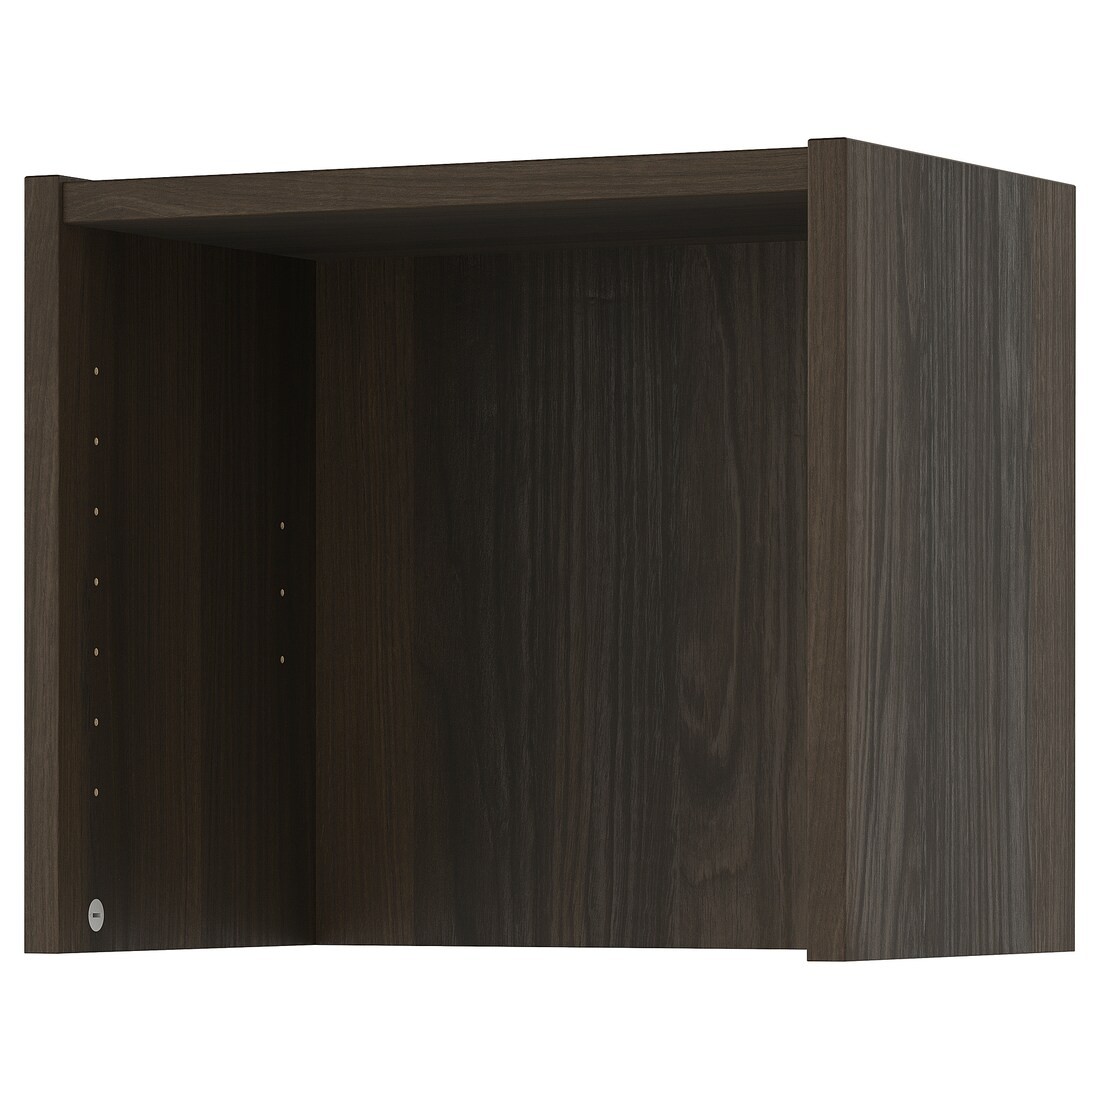 IKEA BILLY Надставка, темно-коричневая имитация дуб, 40x28x35 см 30492826 304.928.26